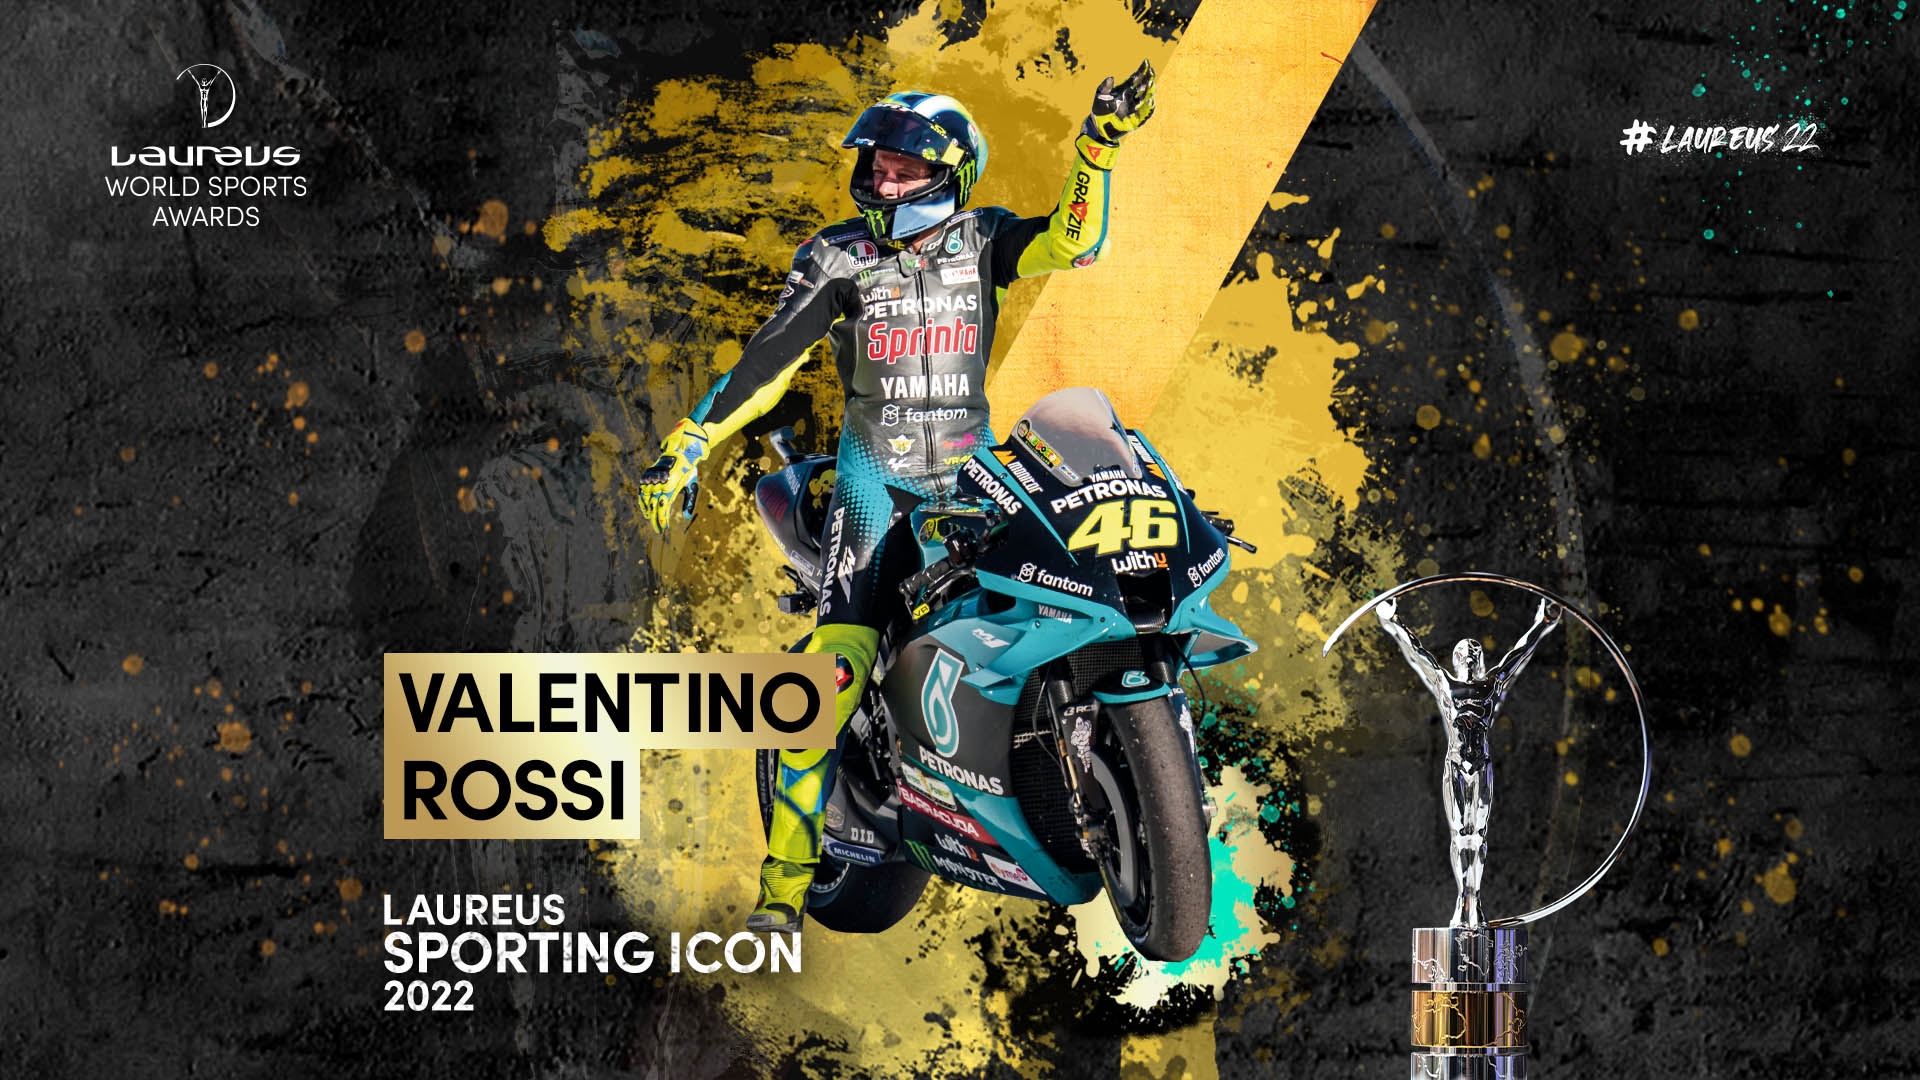 Laureus Sporting Icon Award 2022 - Valentino Rossi 